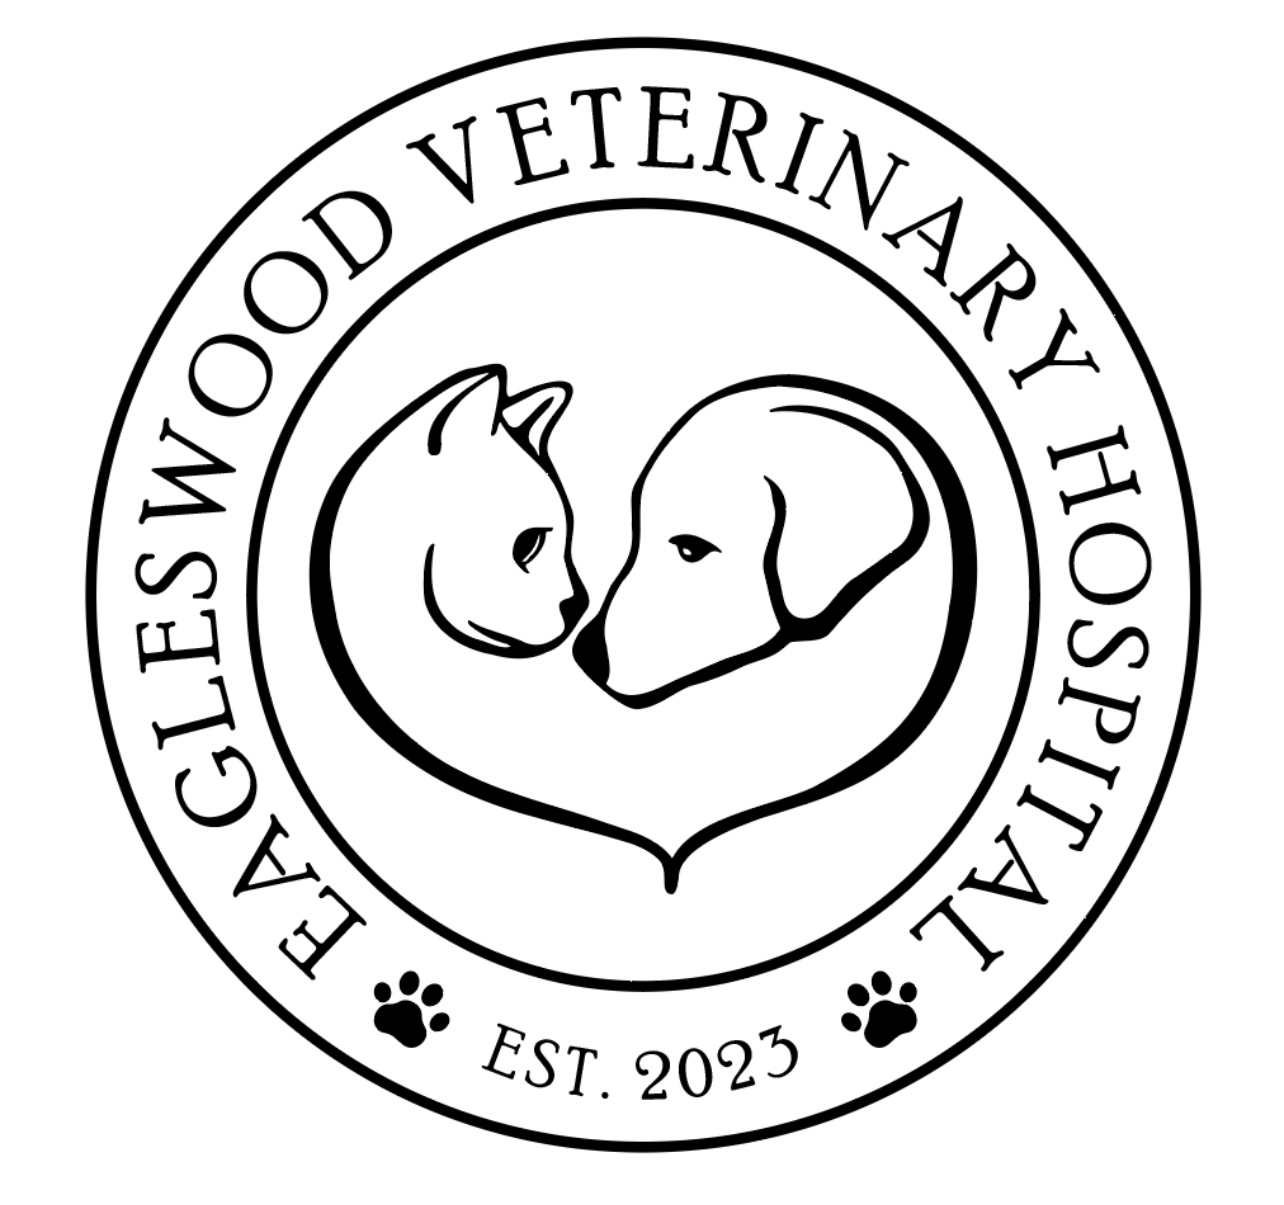 Eagleswood Veterinary Hospital